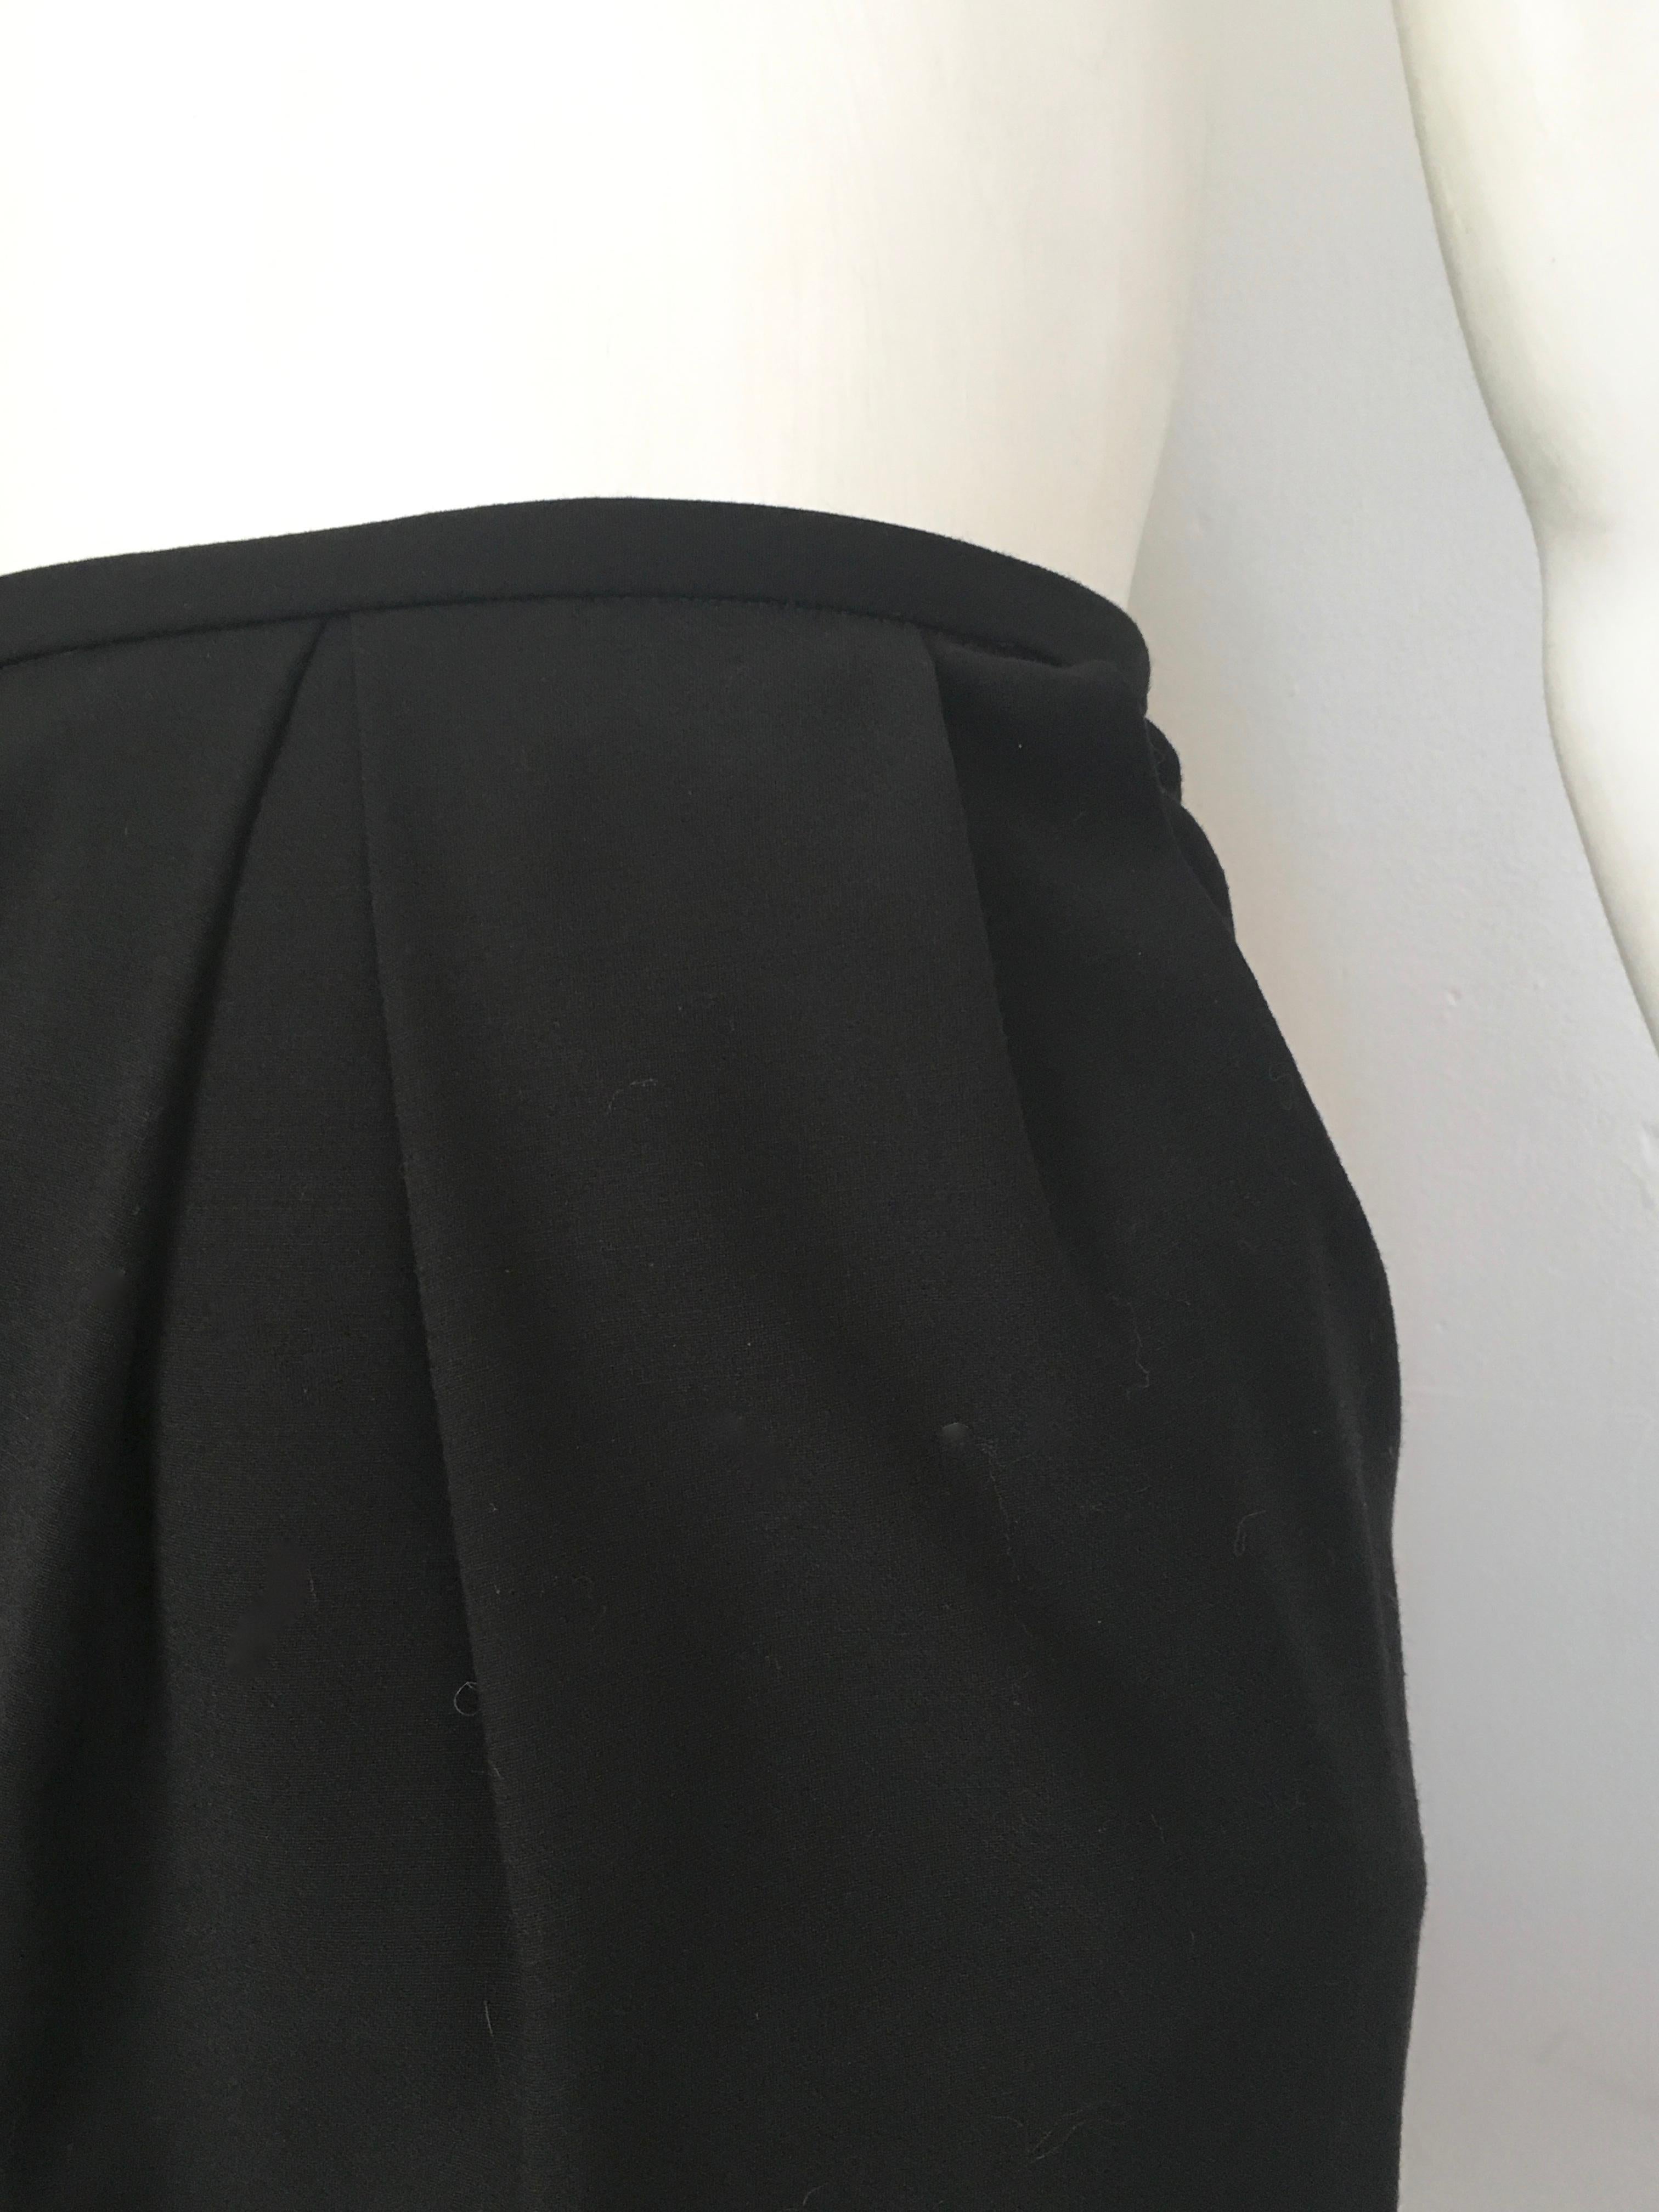 Gianfranco Ferre 1980s Black Short Skirt Size 0. In Excellent Condition For Sale In Atlanta, GA